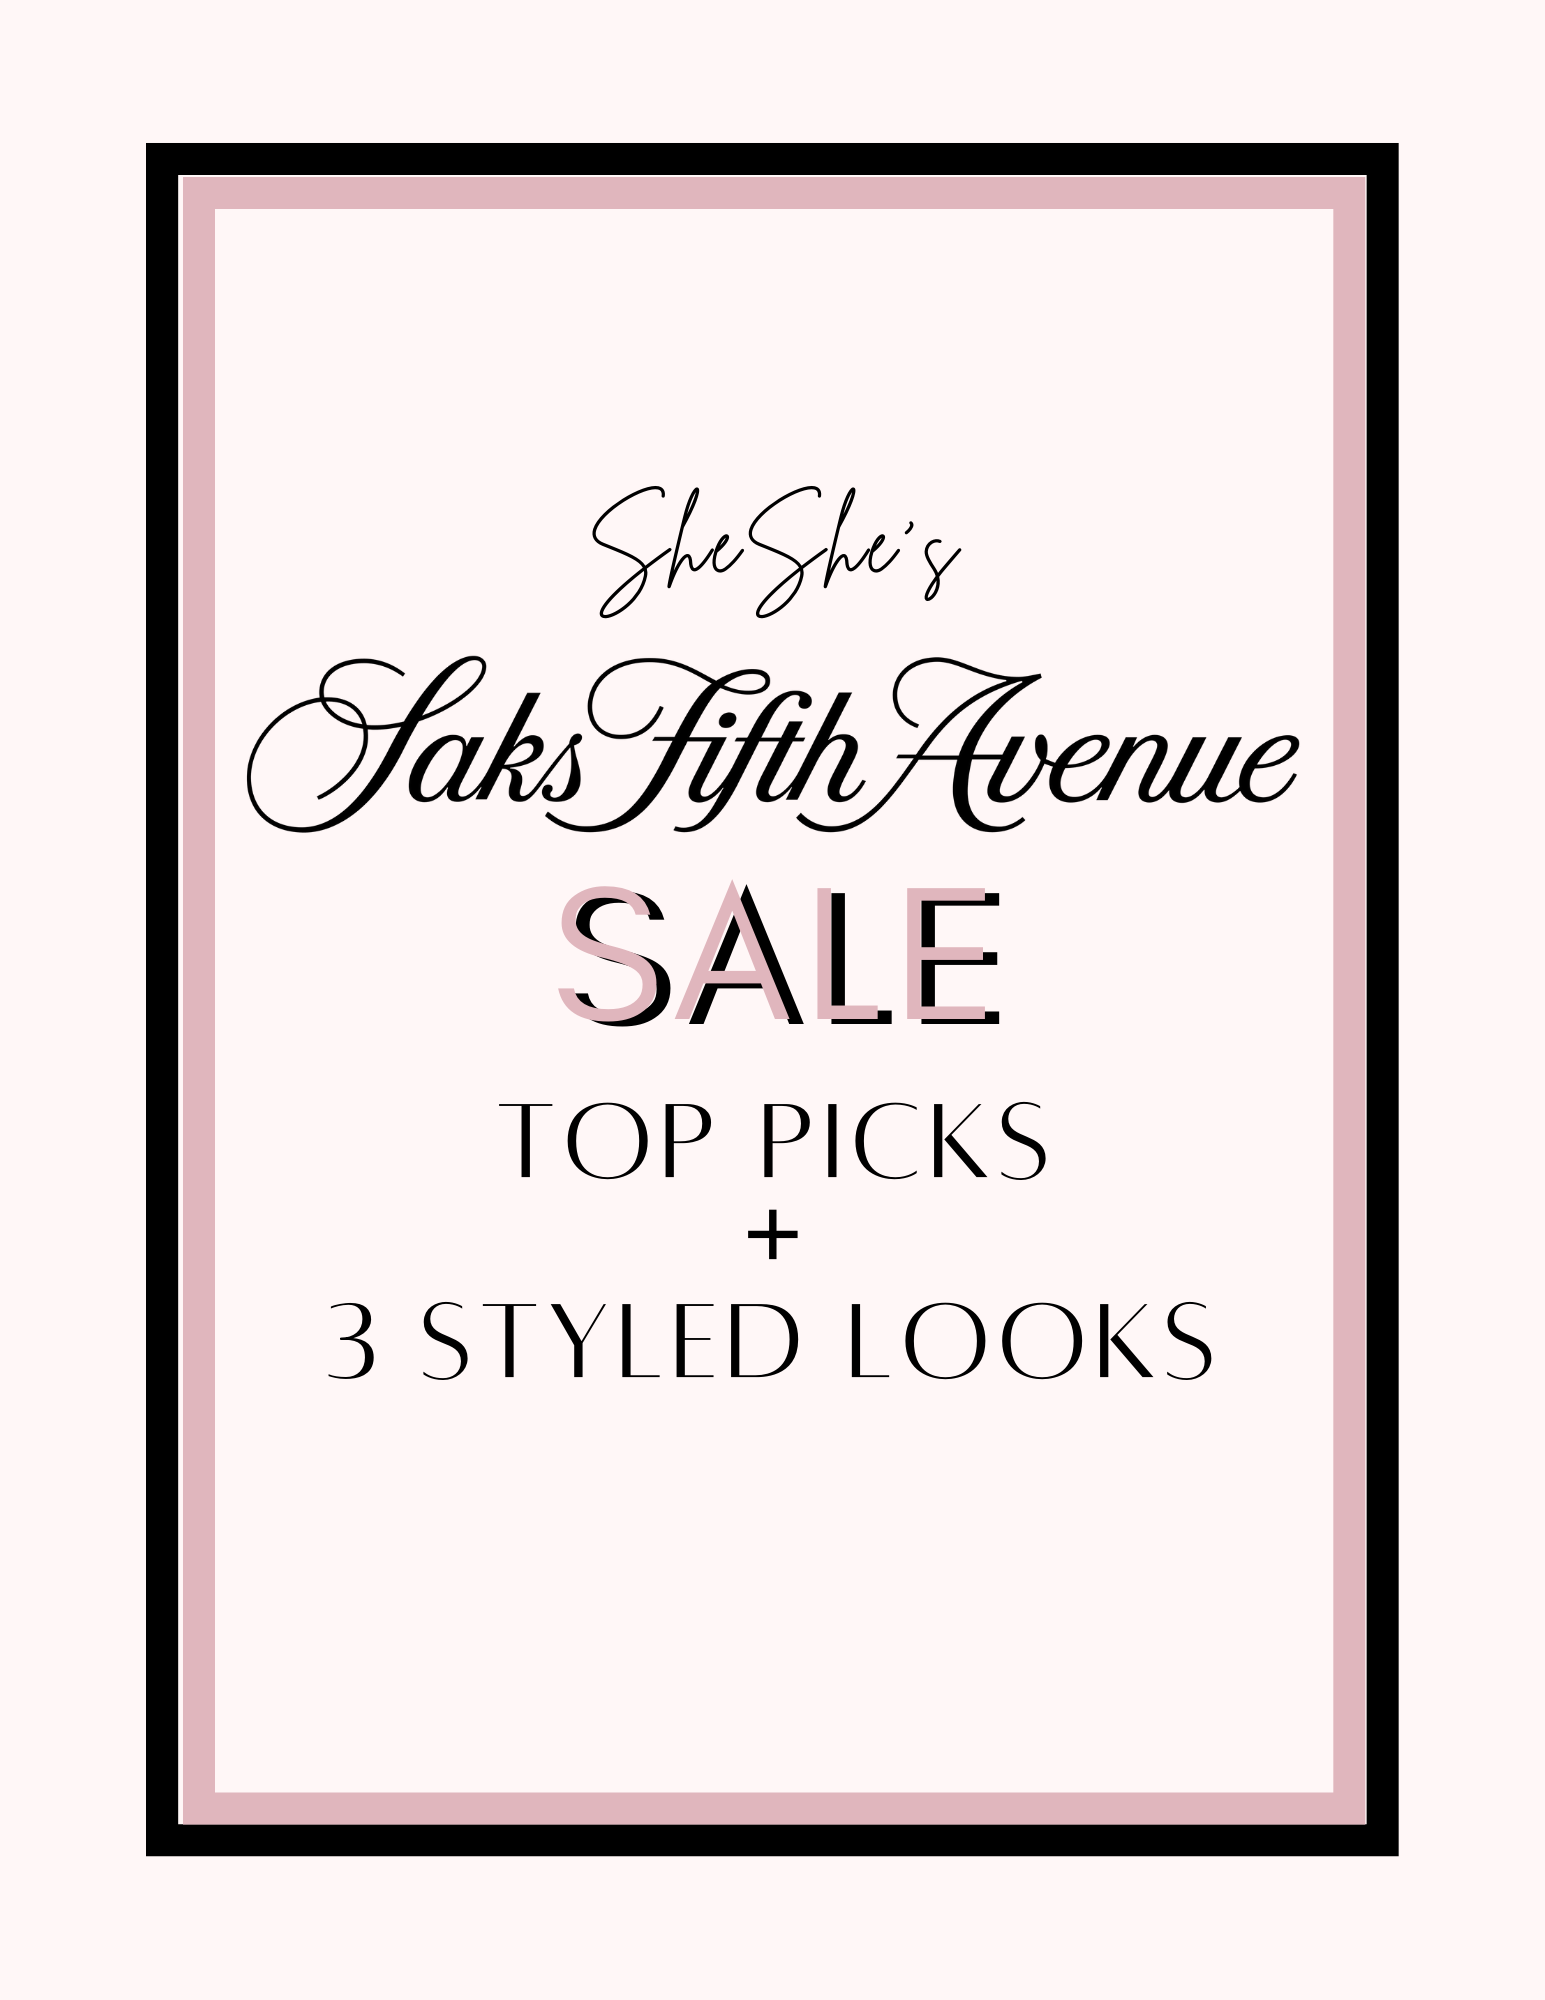 SheShe's Saks Fifth Avenue Sale Top Picks + 3 Styled Looks Flyer 2